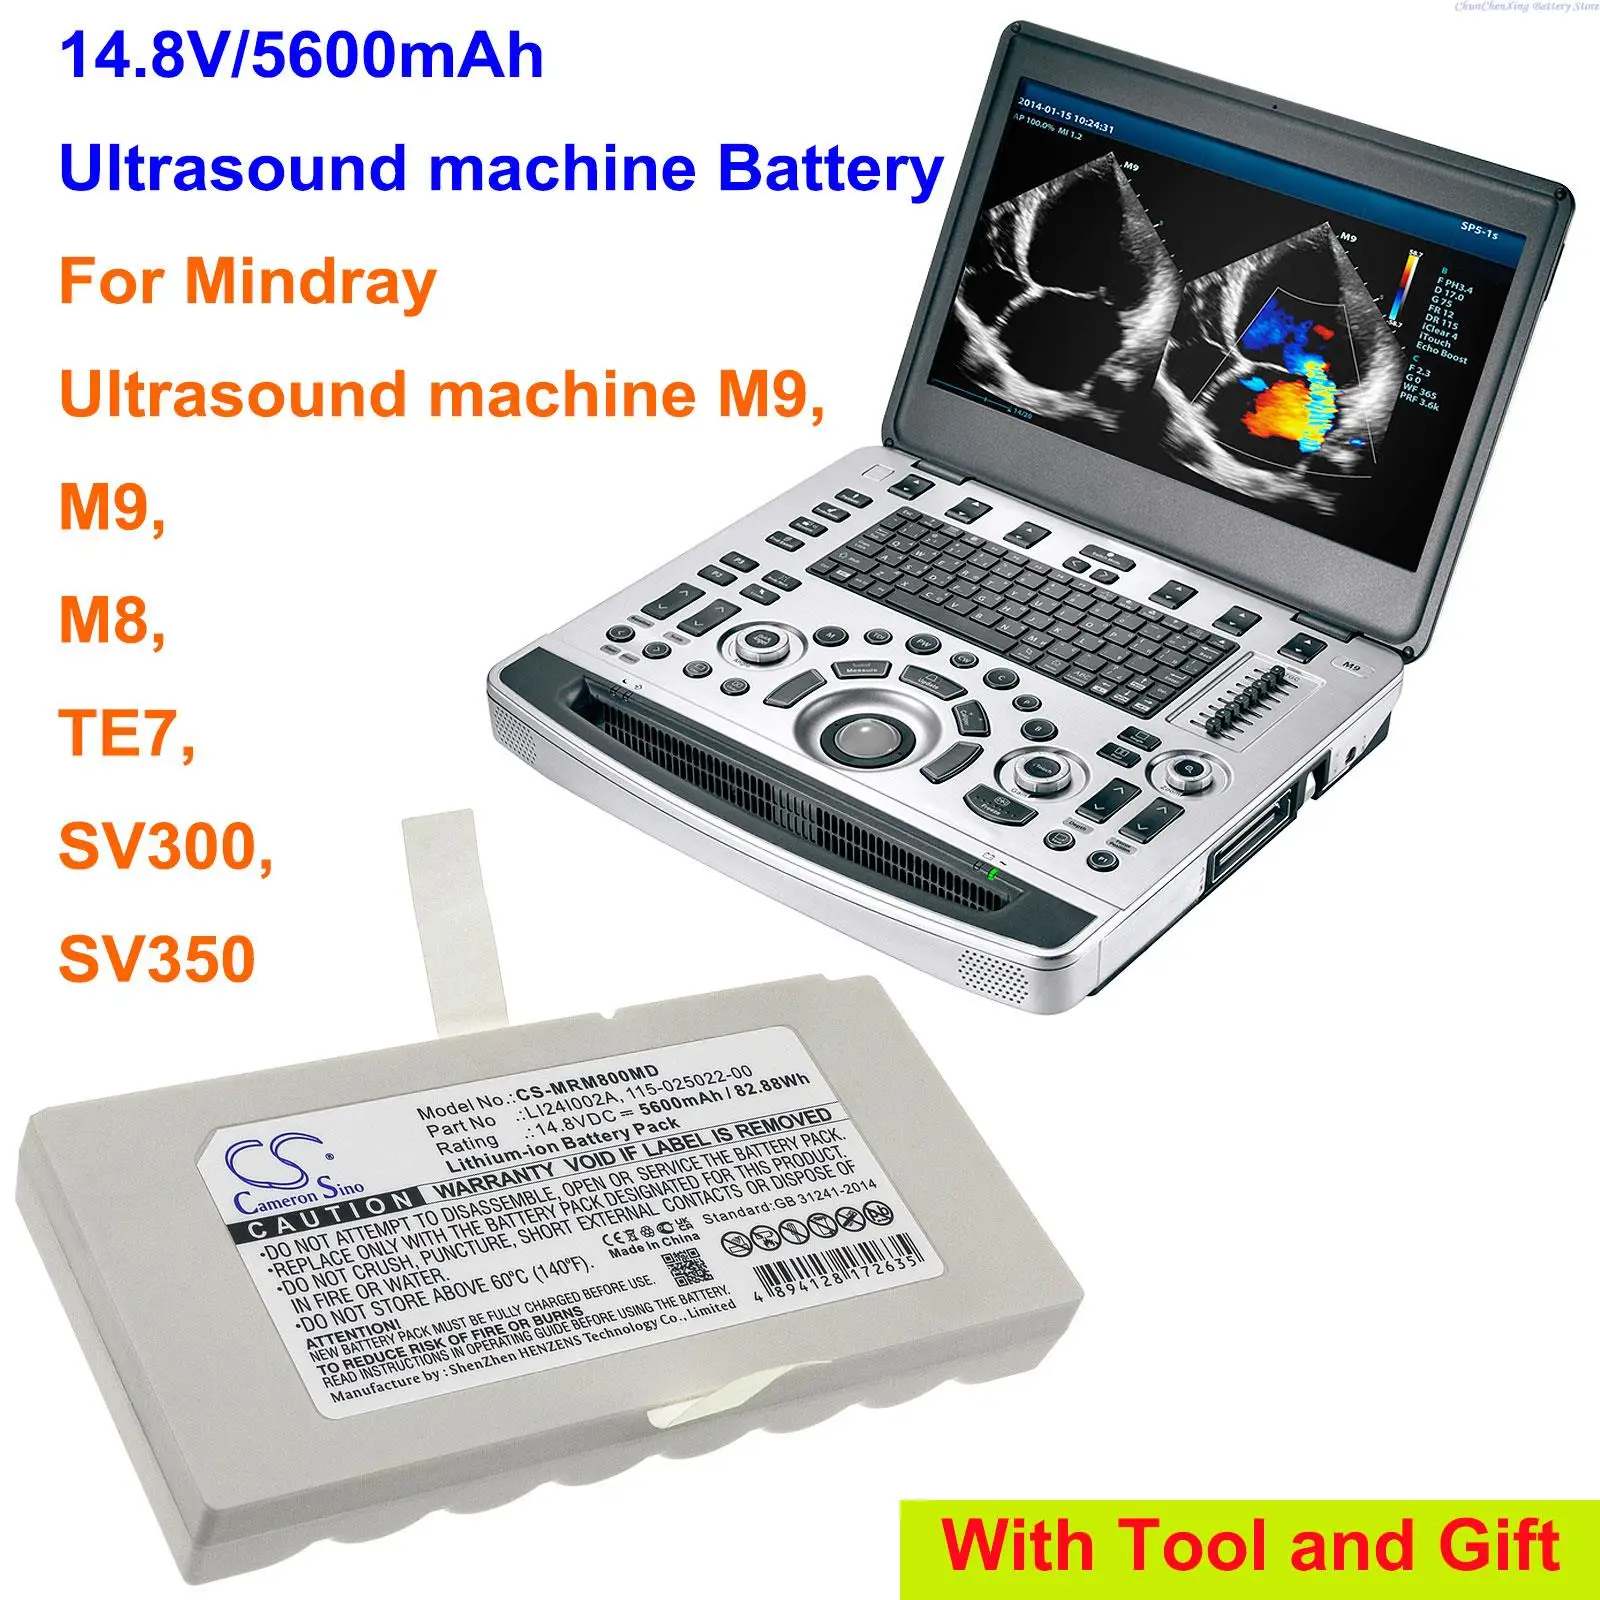 

GreenBattey 5600mAh Battery LI24I002A, 115-025022-00 for Mindray Ultrasound machine M9, M9, M8, TE7, SV300, SV350,SV-300,SV-350